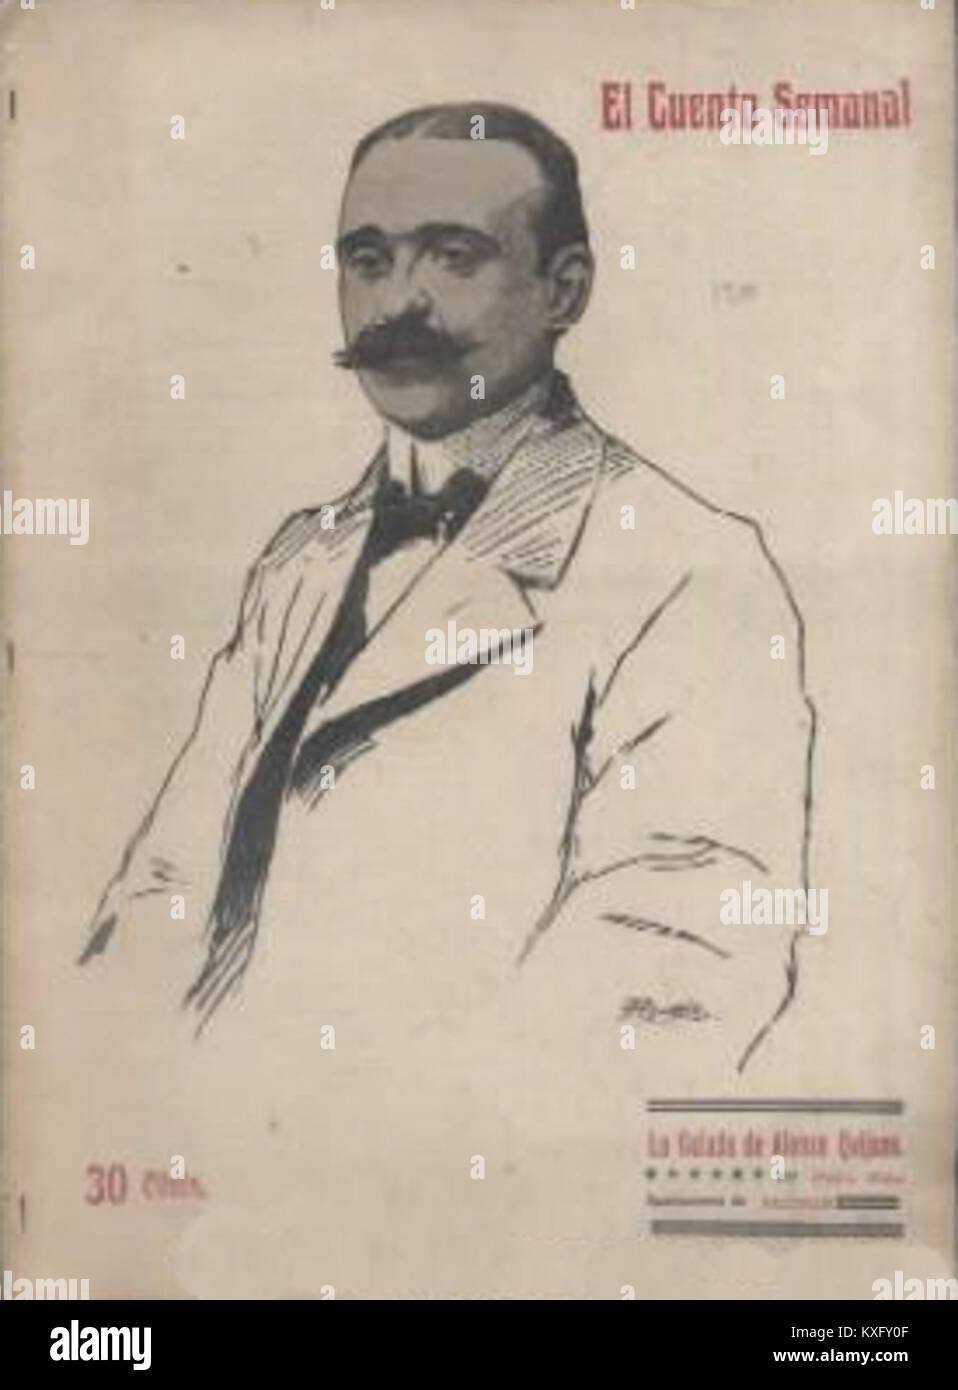 1909-04-16, El Cuento Semanal, La celada de Alonso Quijano, de Pedro Mata, Agustín, nº120 Stock Photo